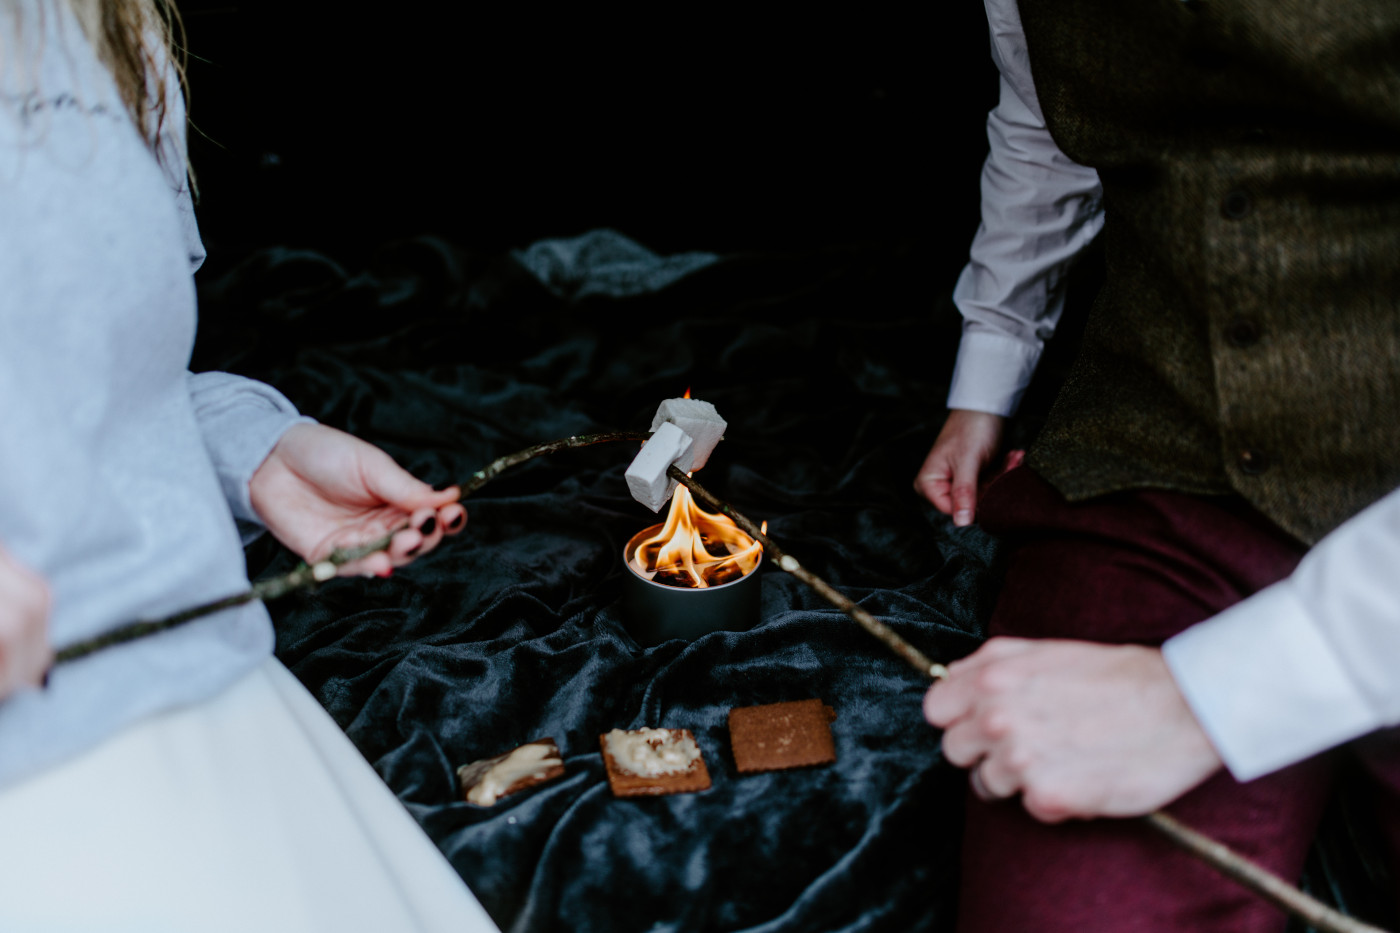 Jordan and Andrew roast marshmallows on a portable stove.